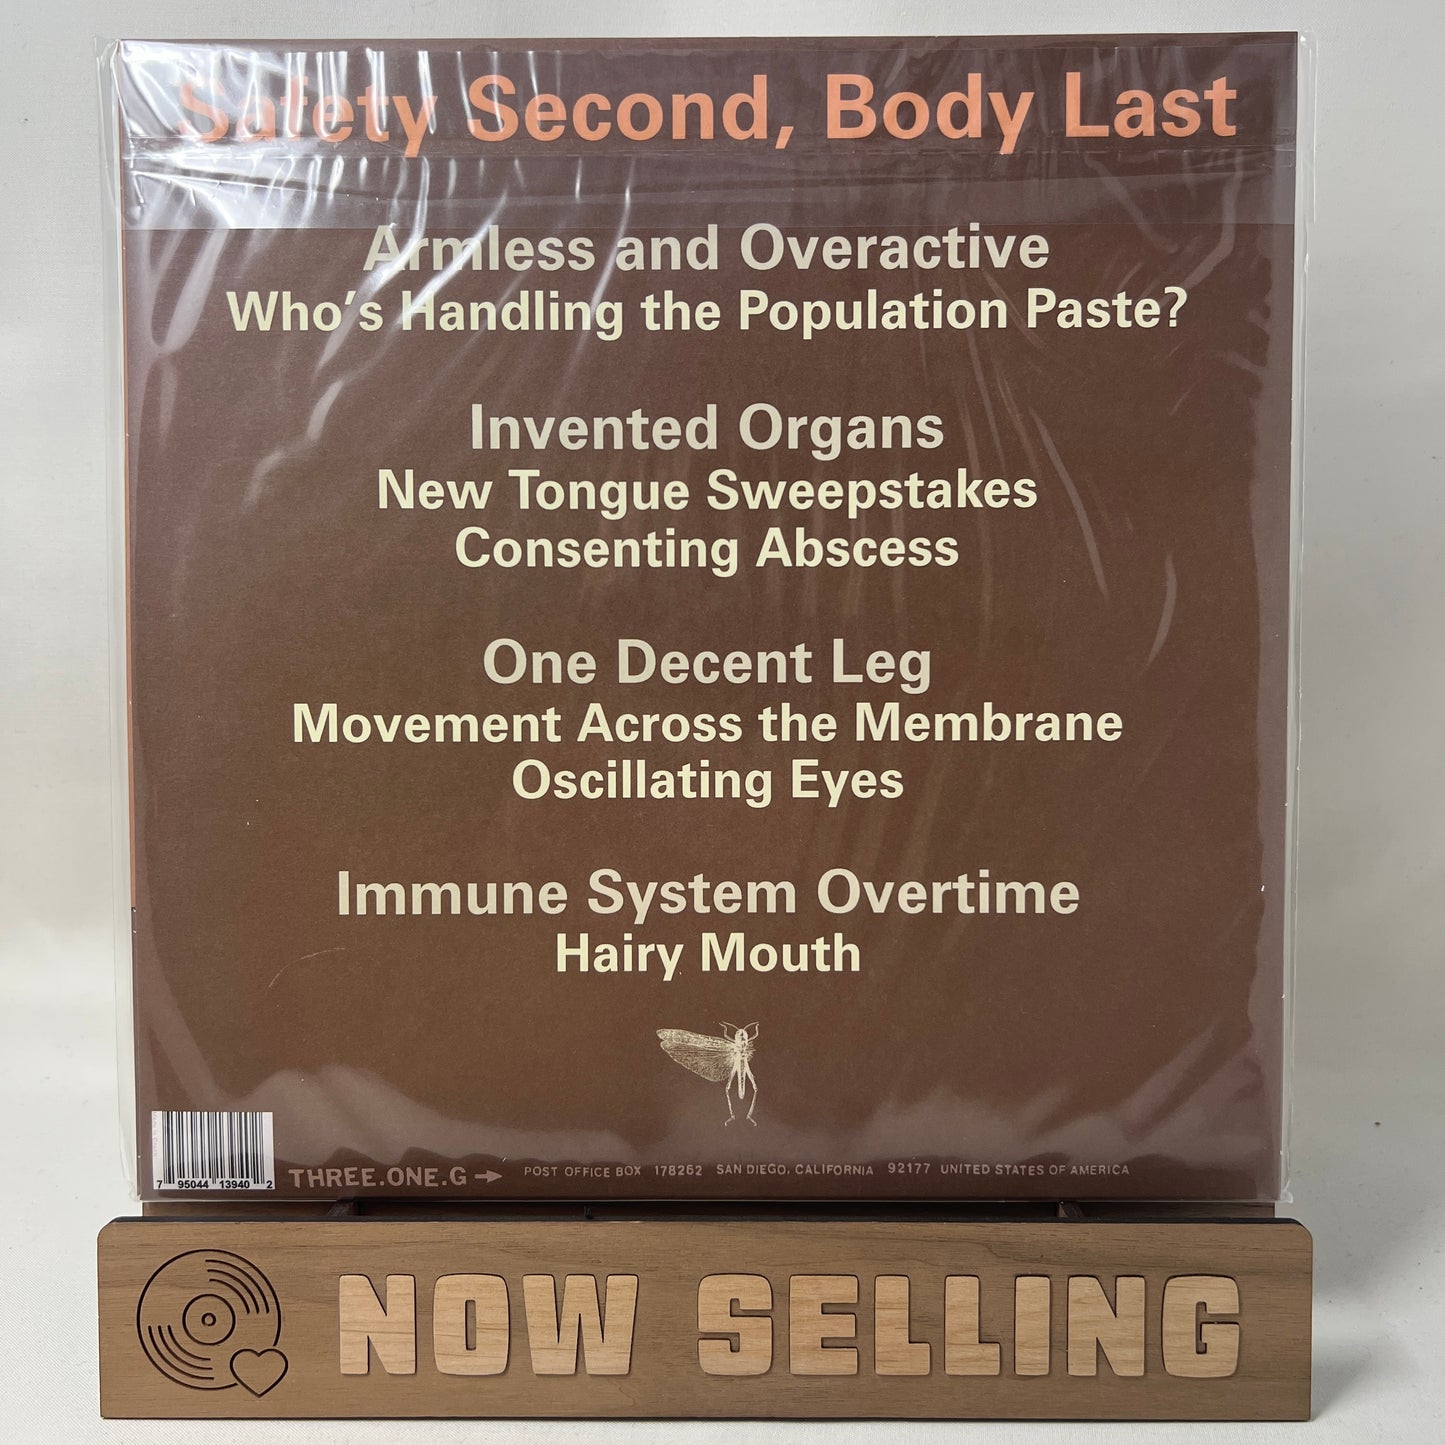 The Locust - Safety Second, Body Last Vinyl LP Black / Brown